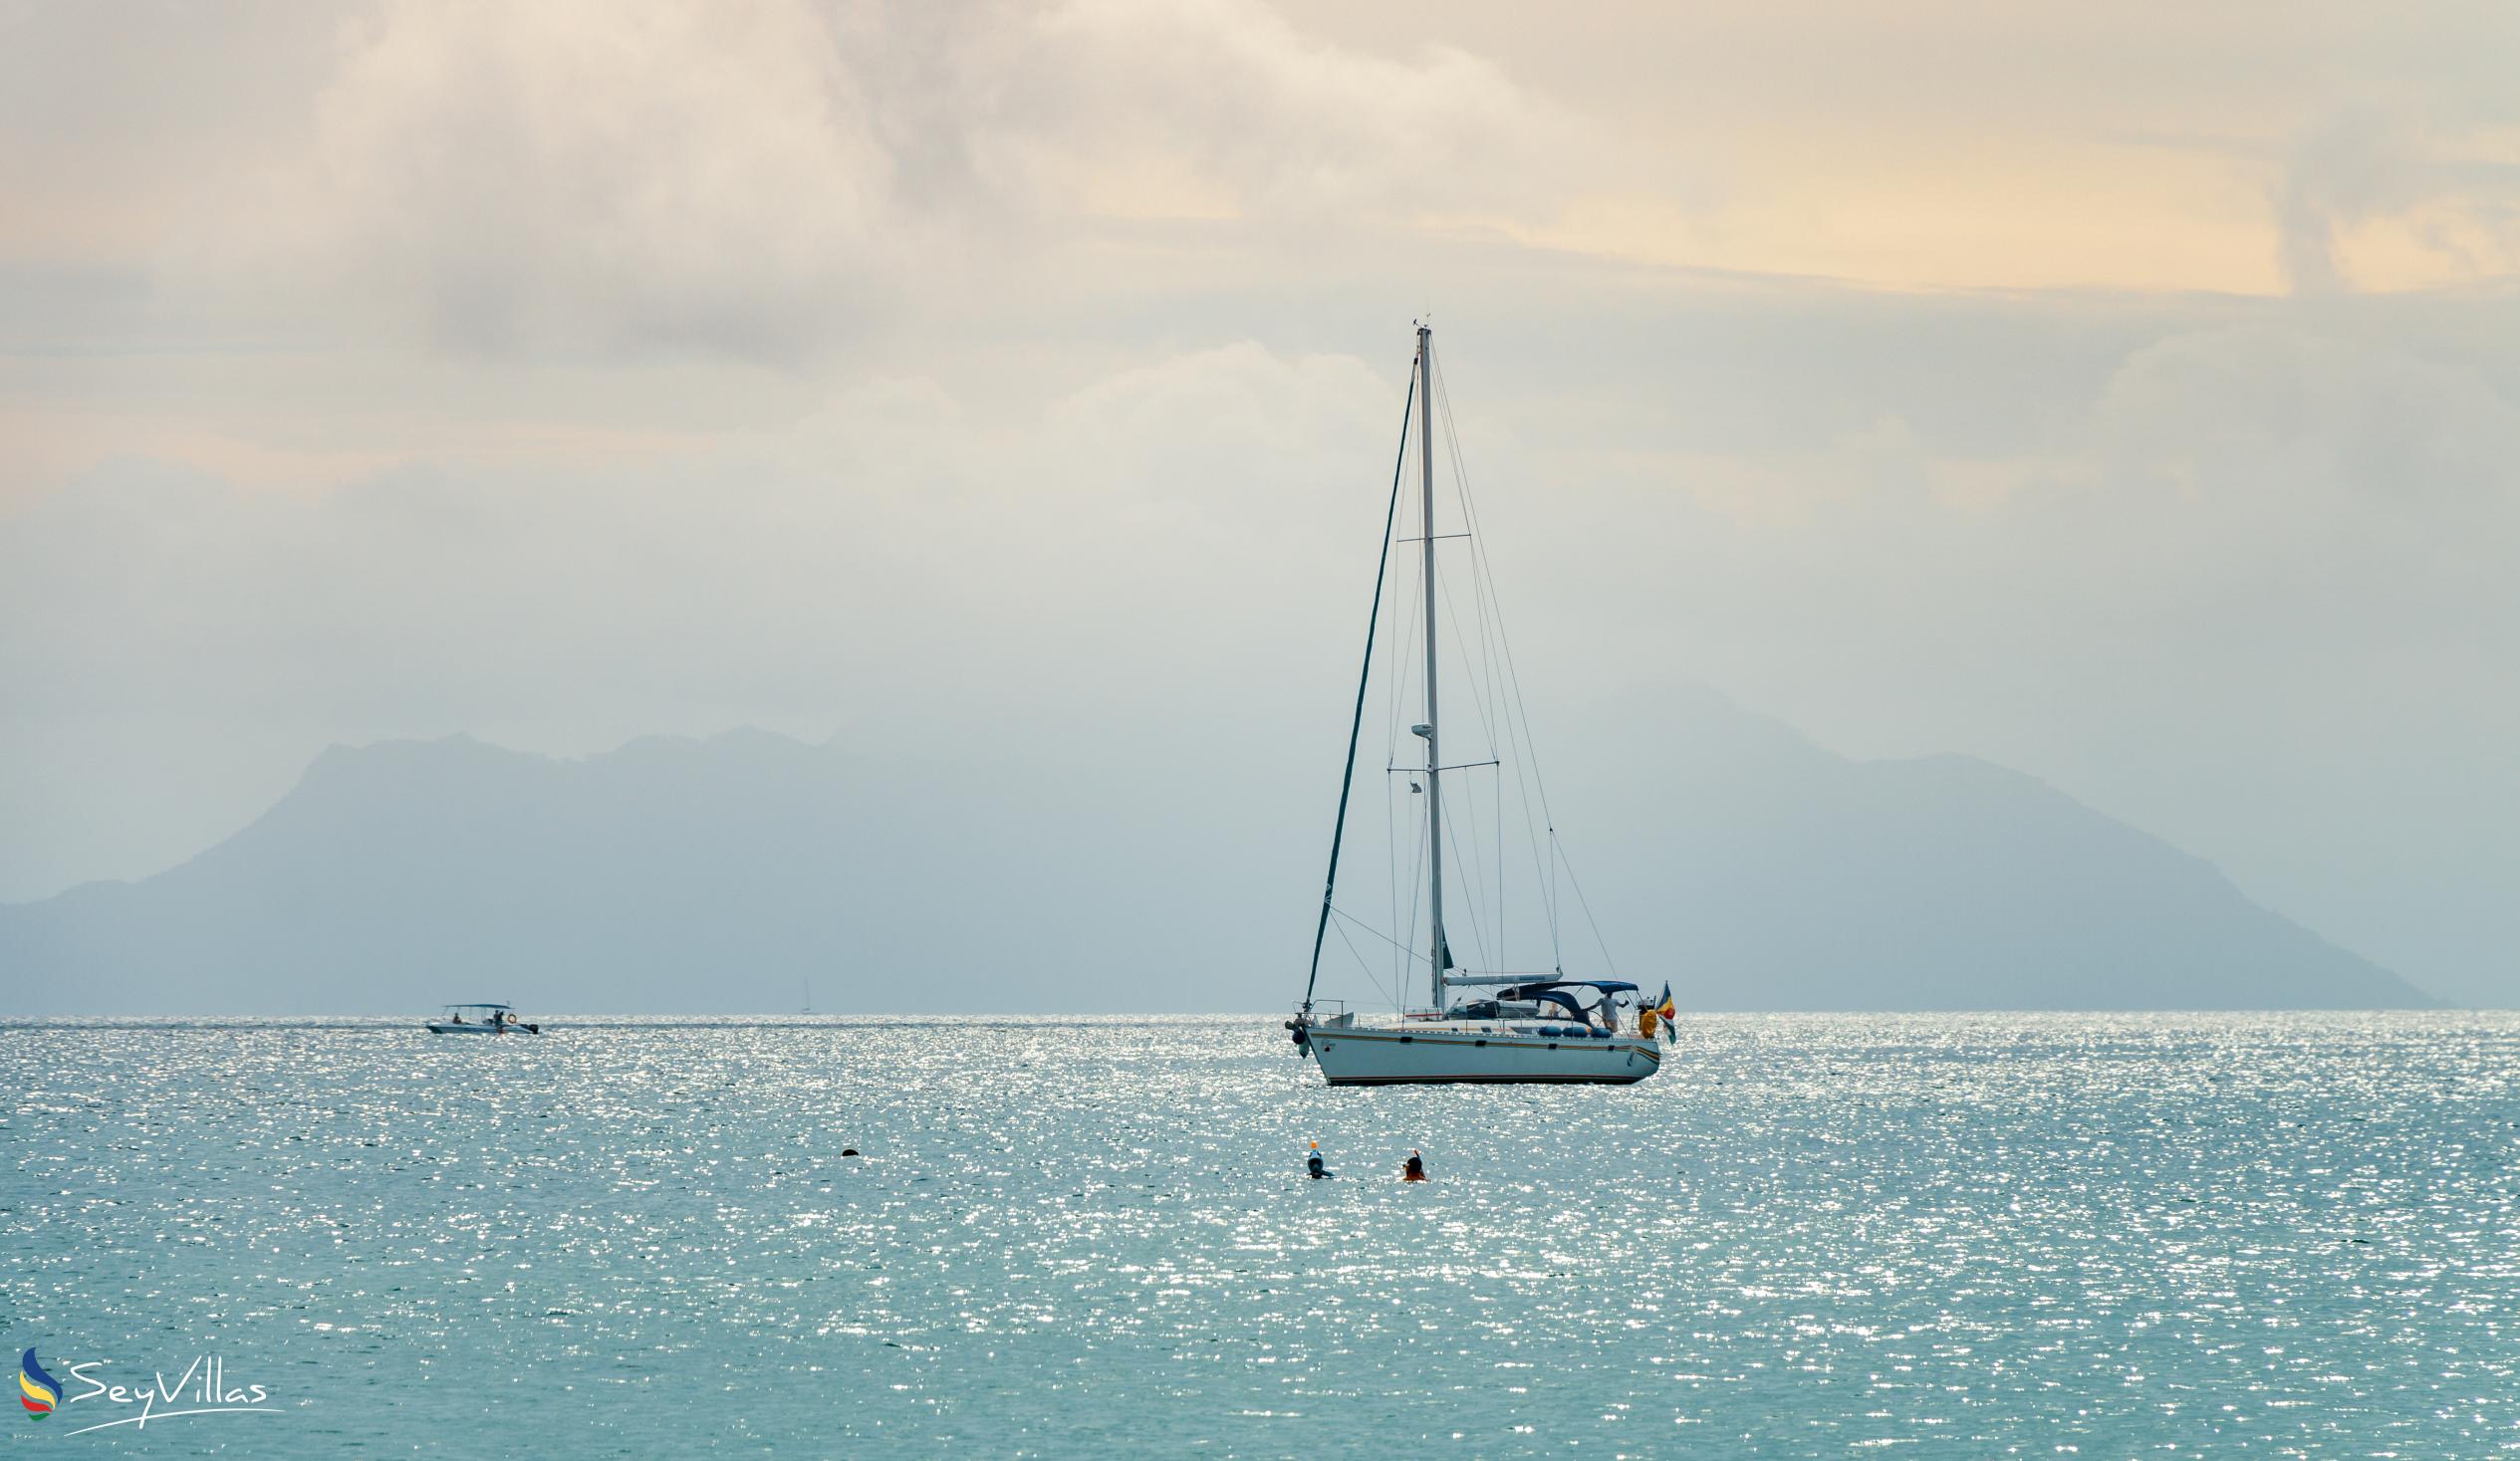 Foto 4: Seyscapes Yacht Charter - Aussenbereich - Seychellen (Seychellen)